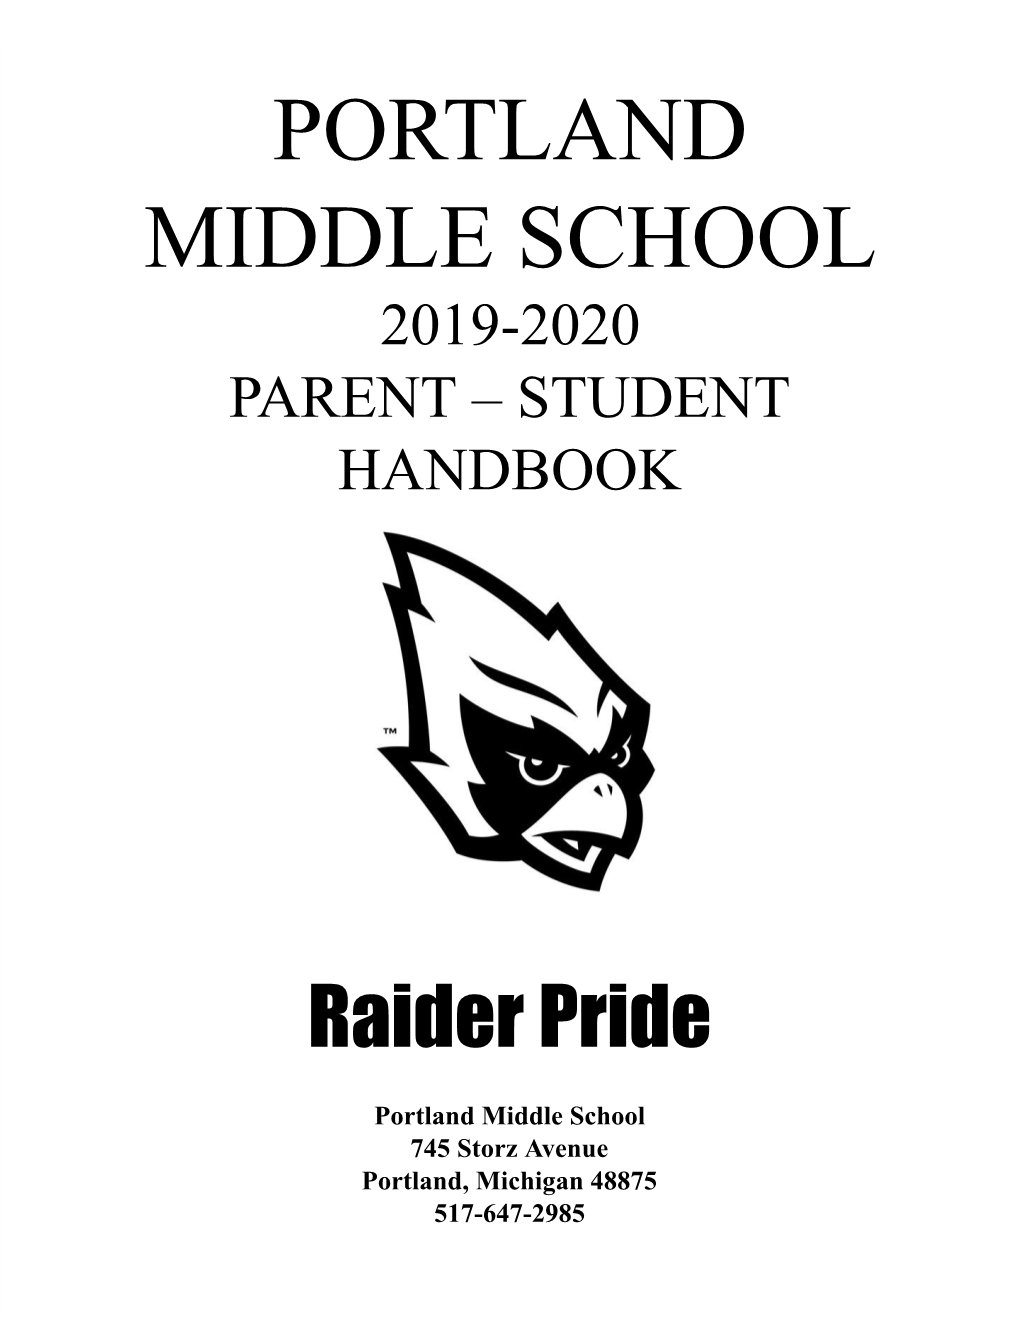 Portland Middle School Handbook 2019-2020